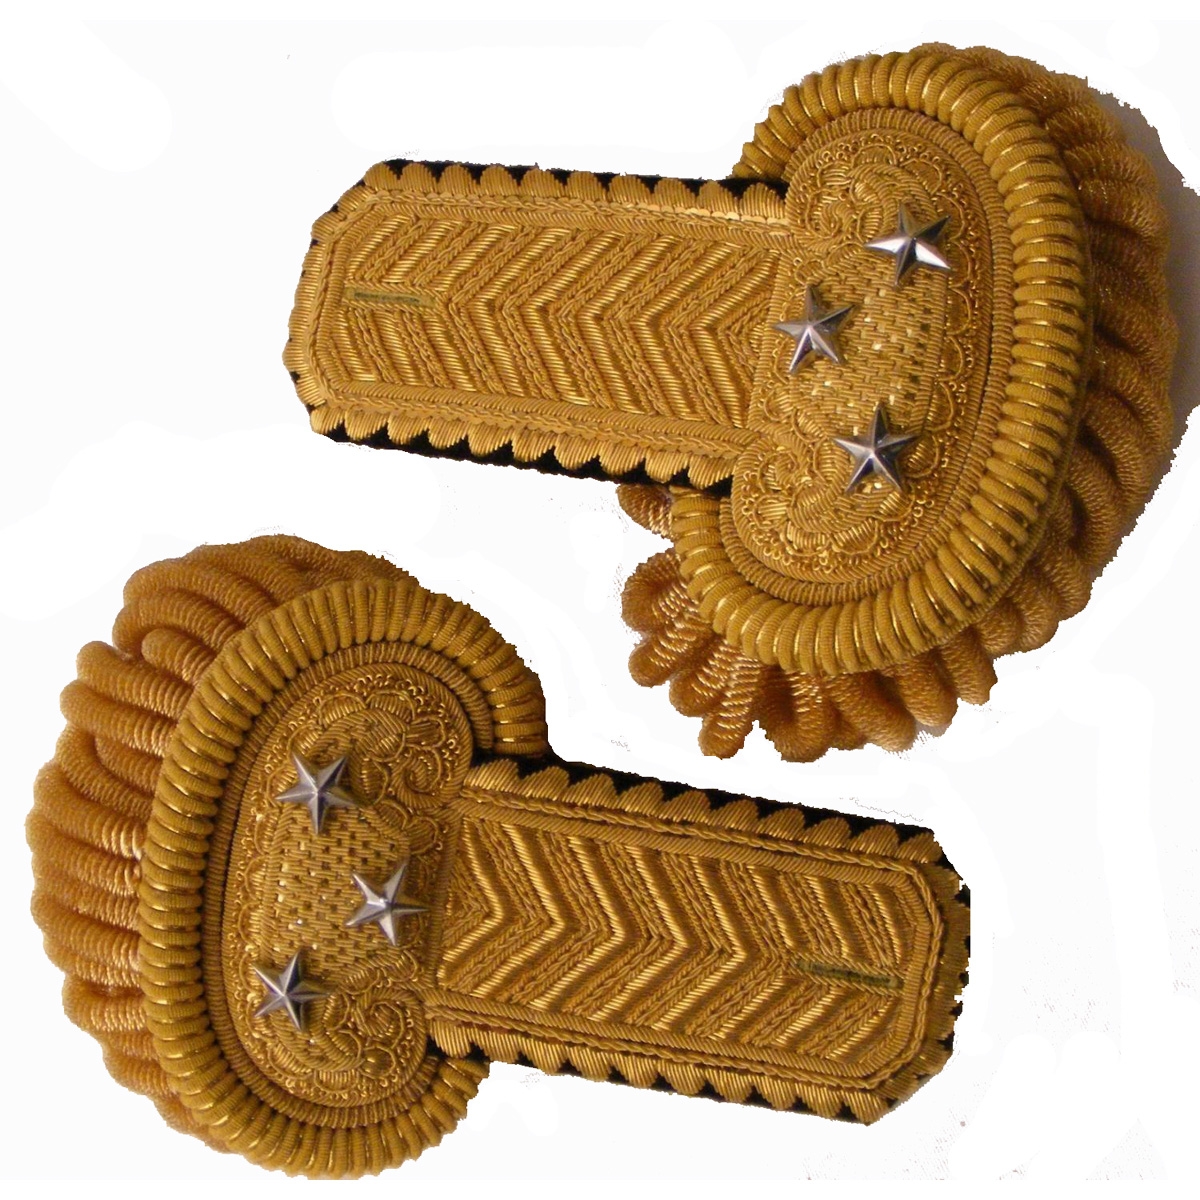 Epaulettes of general or marshall, 1844 regulation type - The pair Embroidery Gold fringe Epaulette 